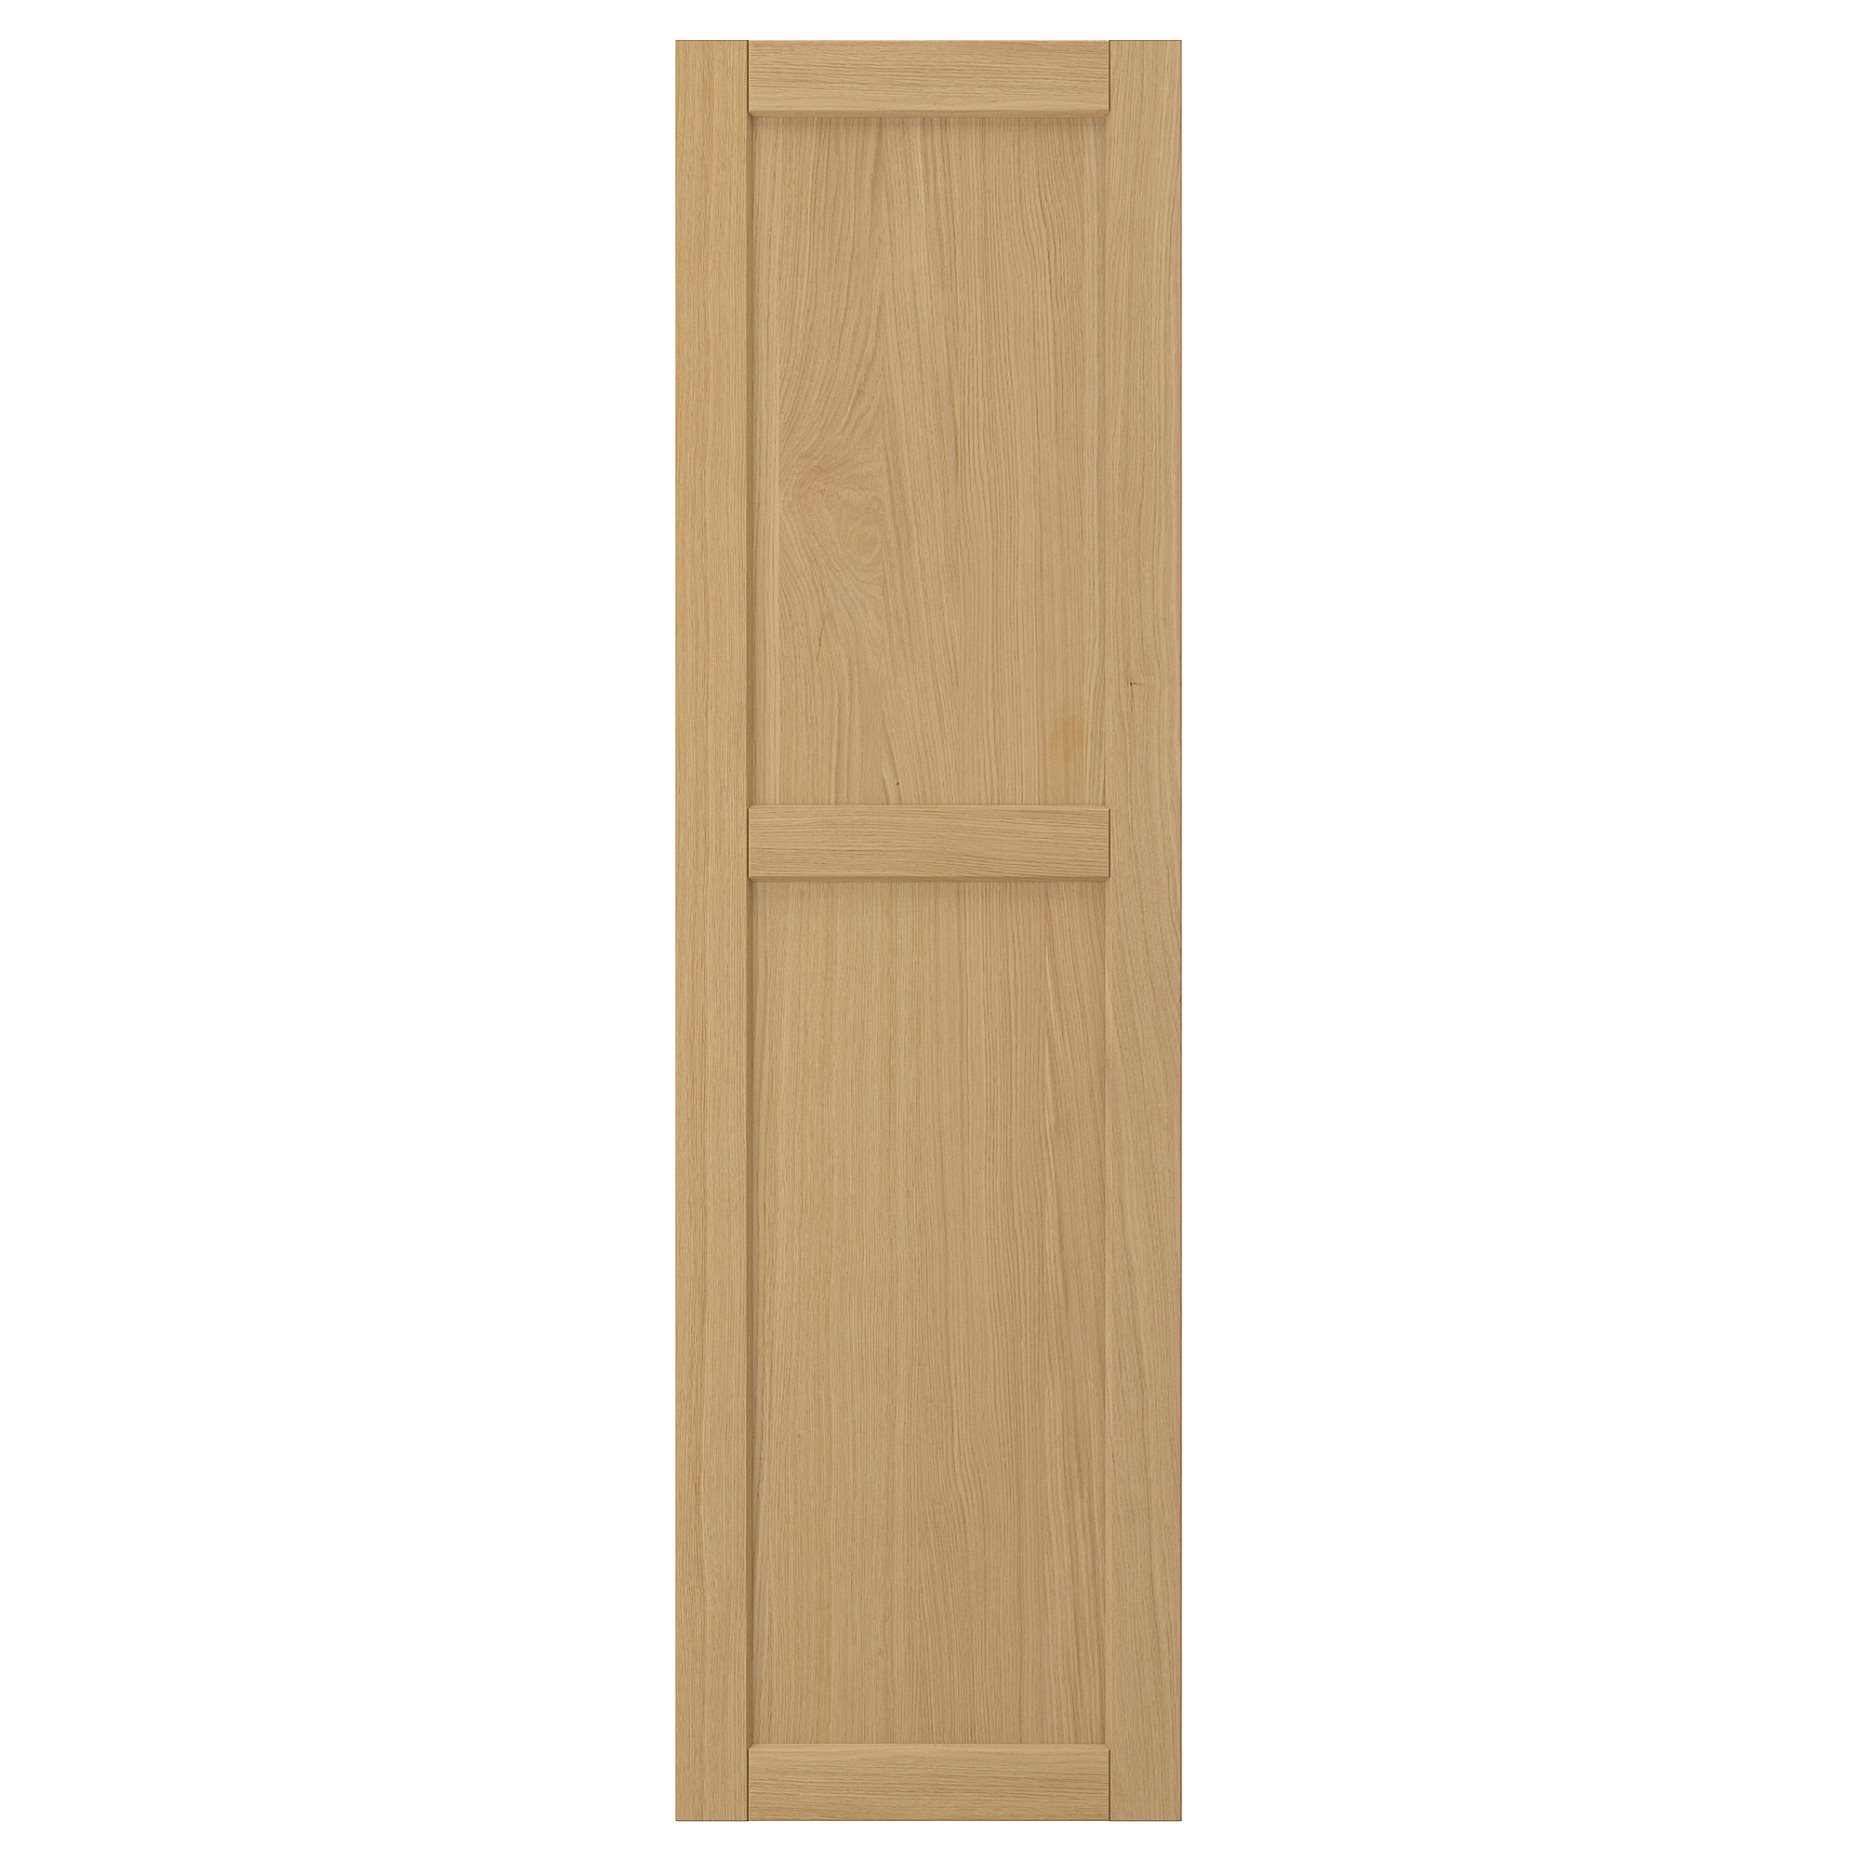 FORSBACKA, πόρτα, 40x140 cm, 005.652.30